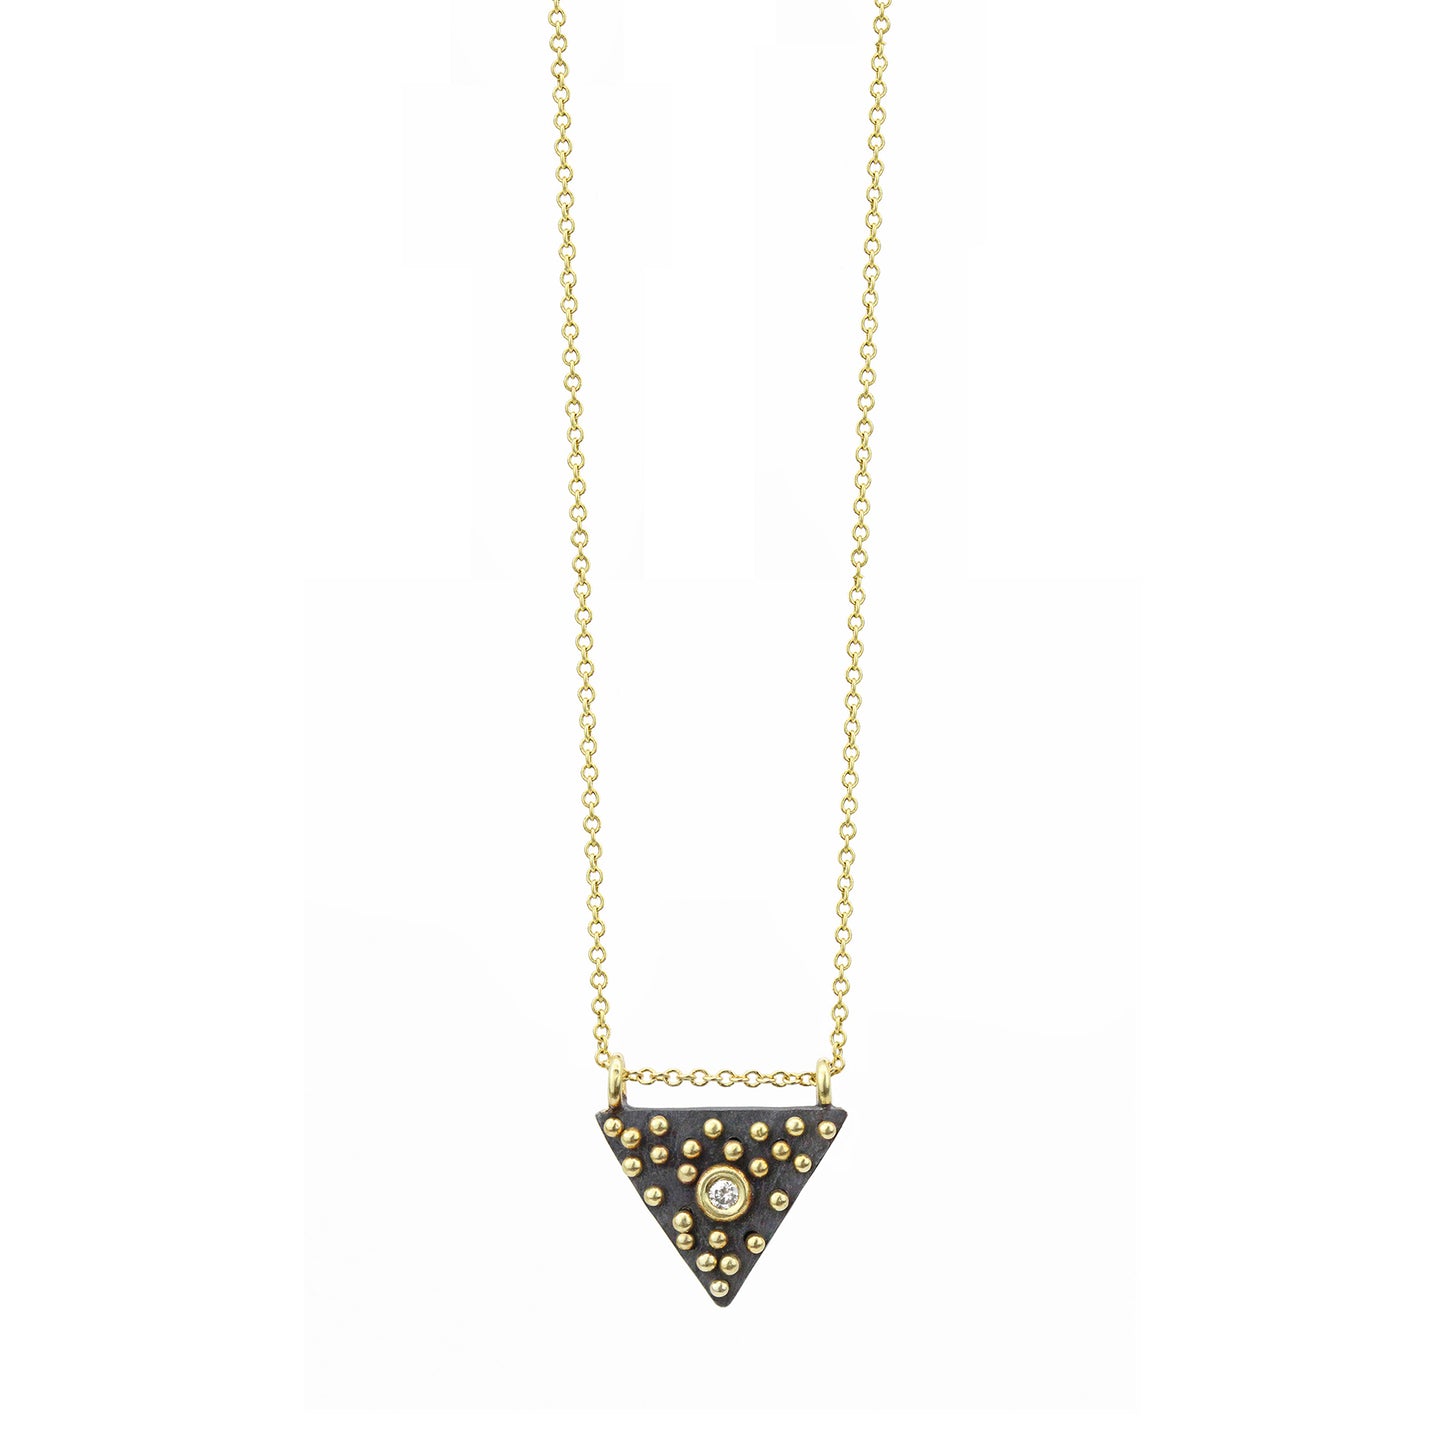 Triangular Pendant Necklace with 18k Yellow Gold Dots + White Diamond